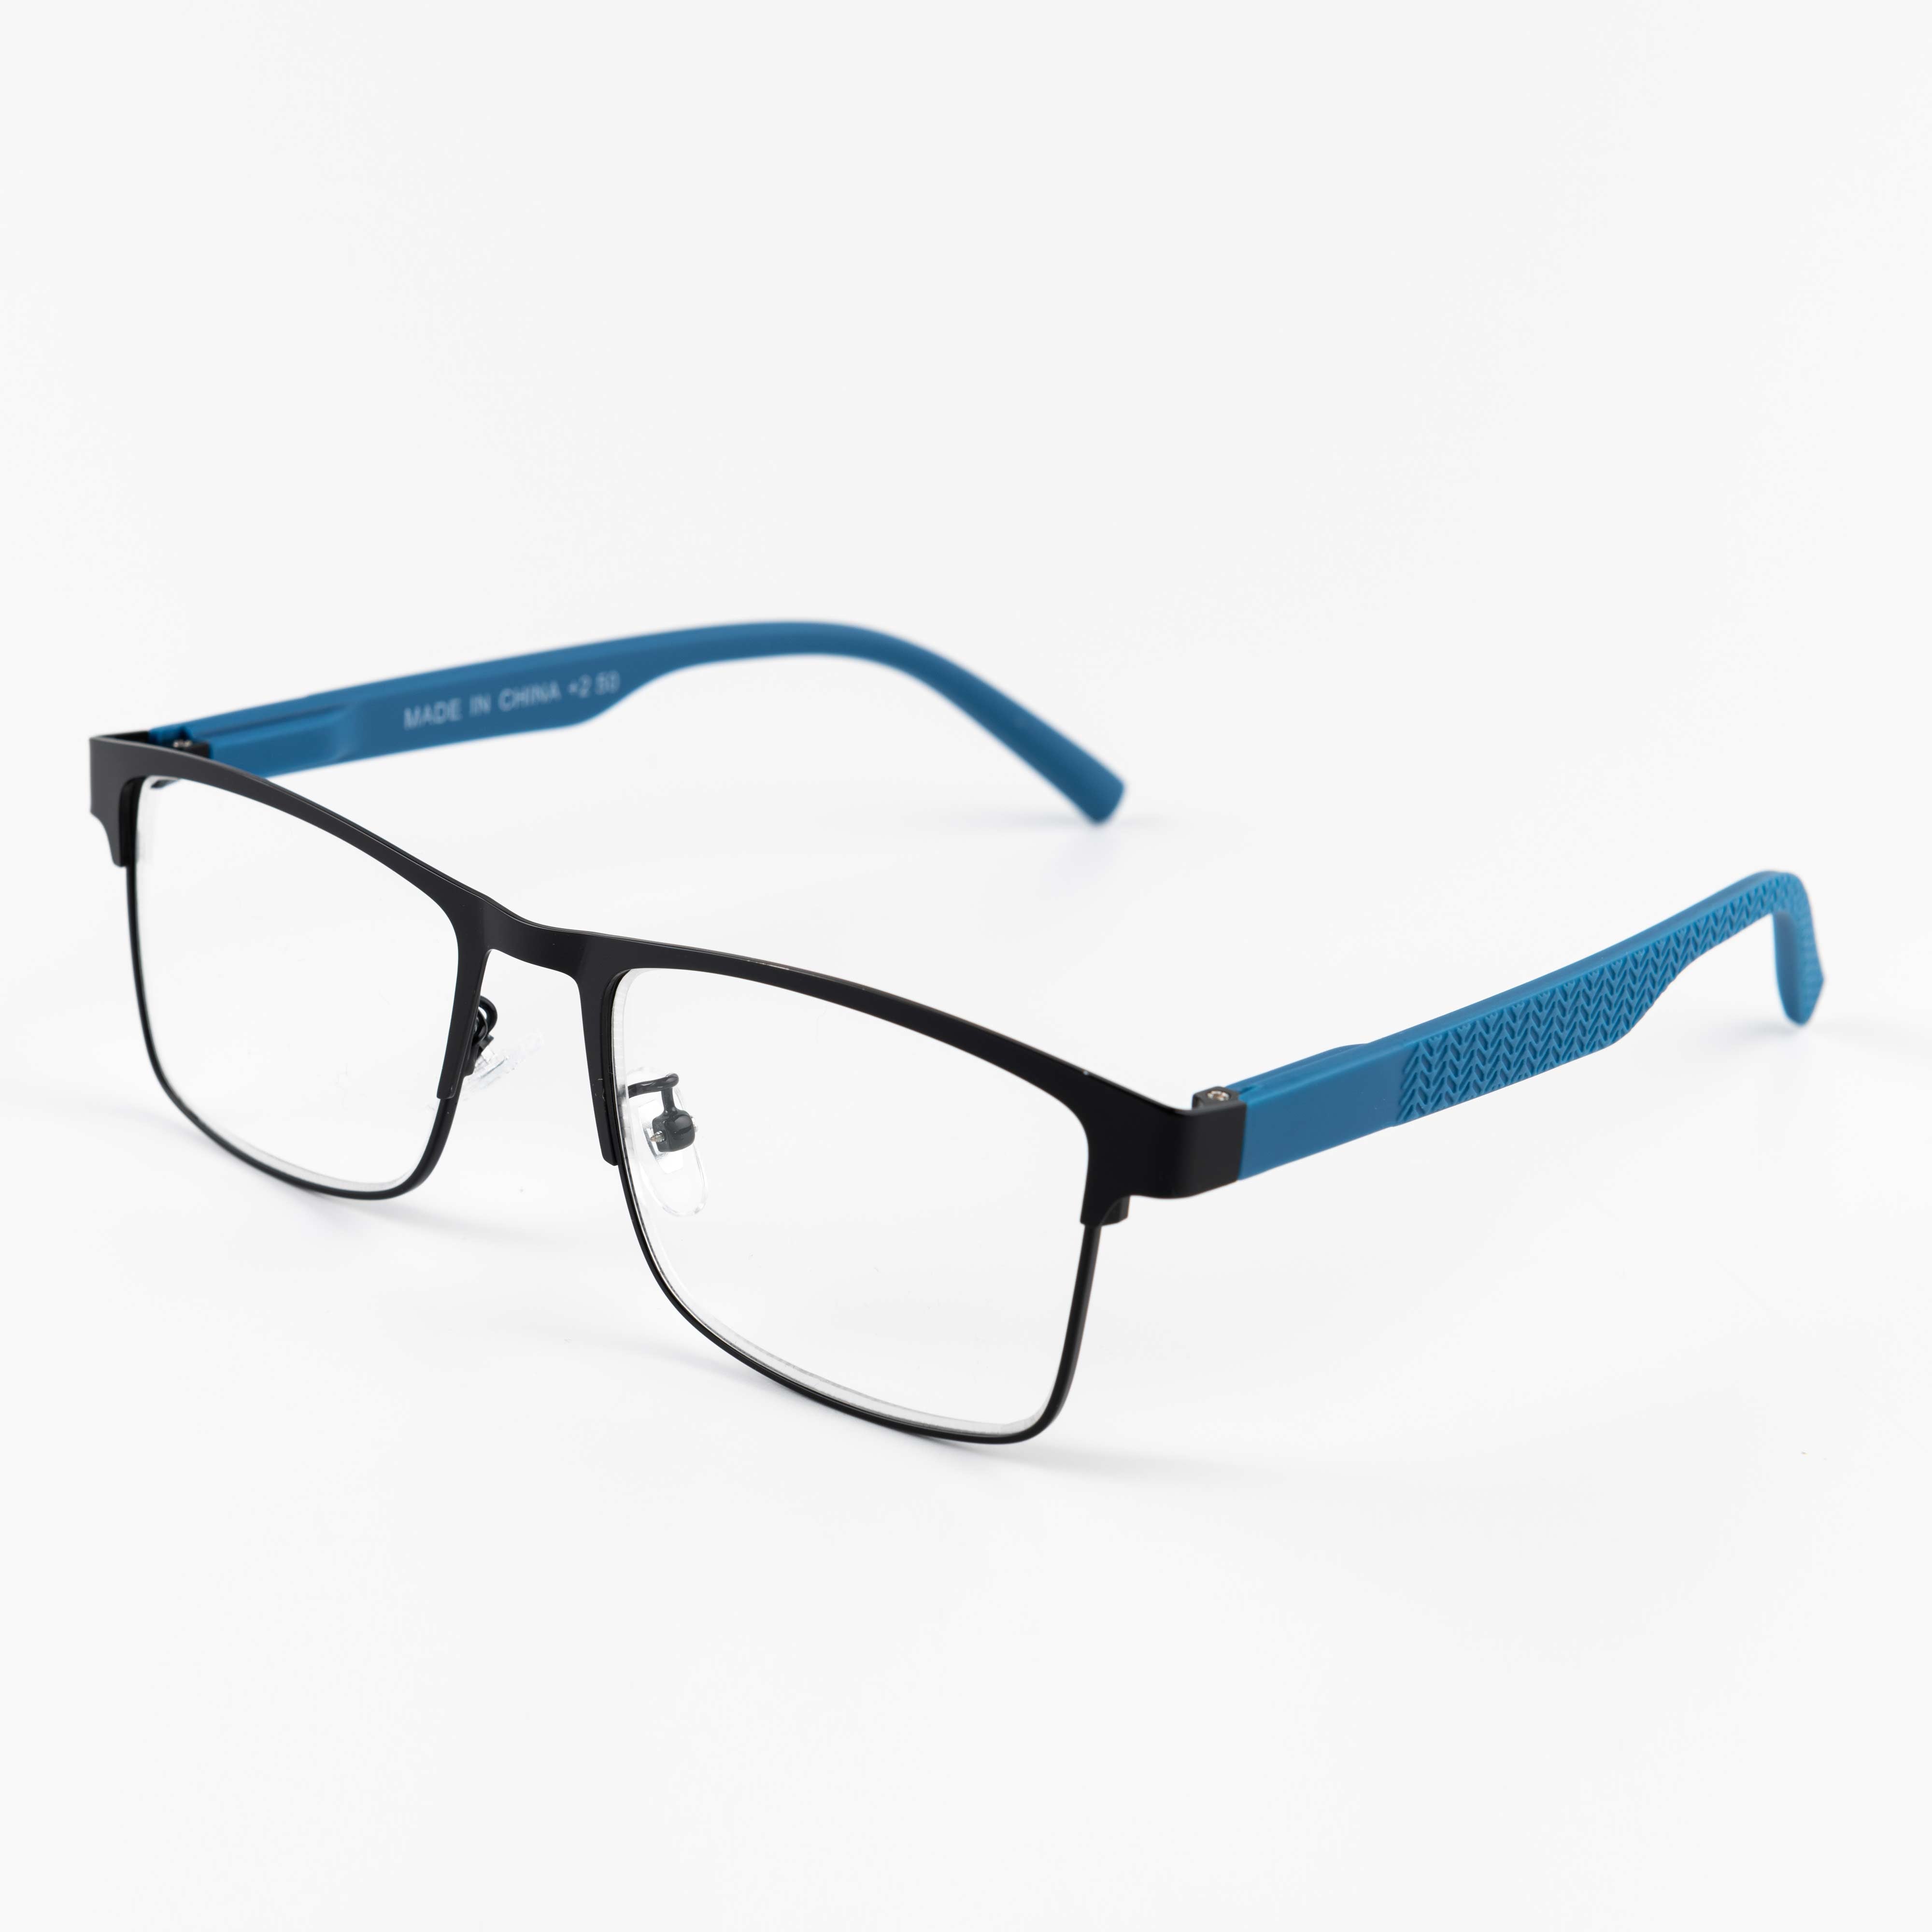 Blue and black square reading glasses